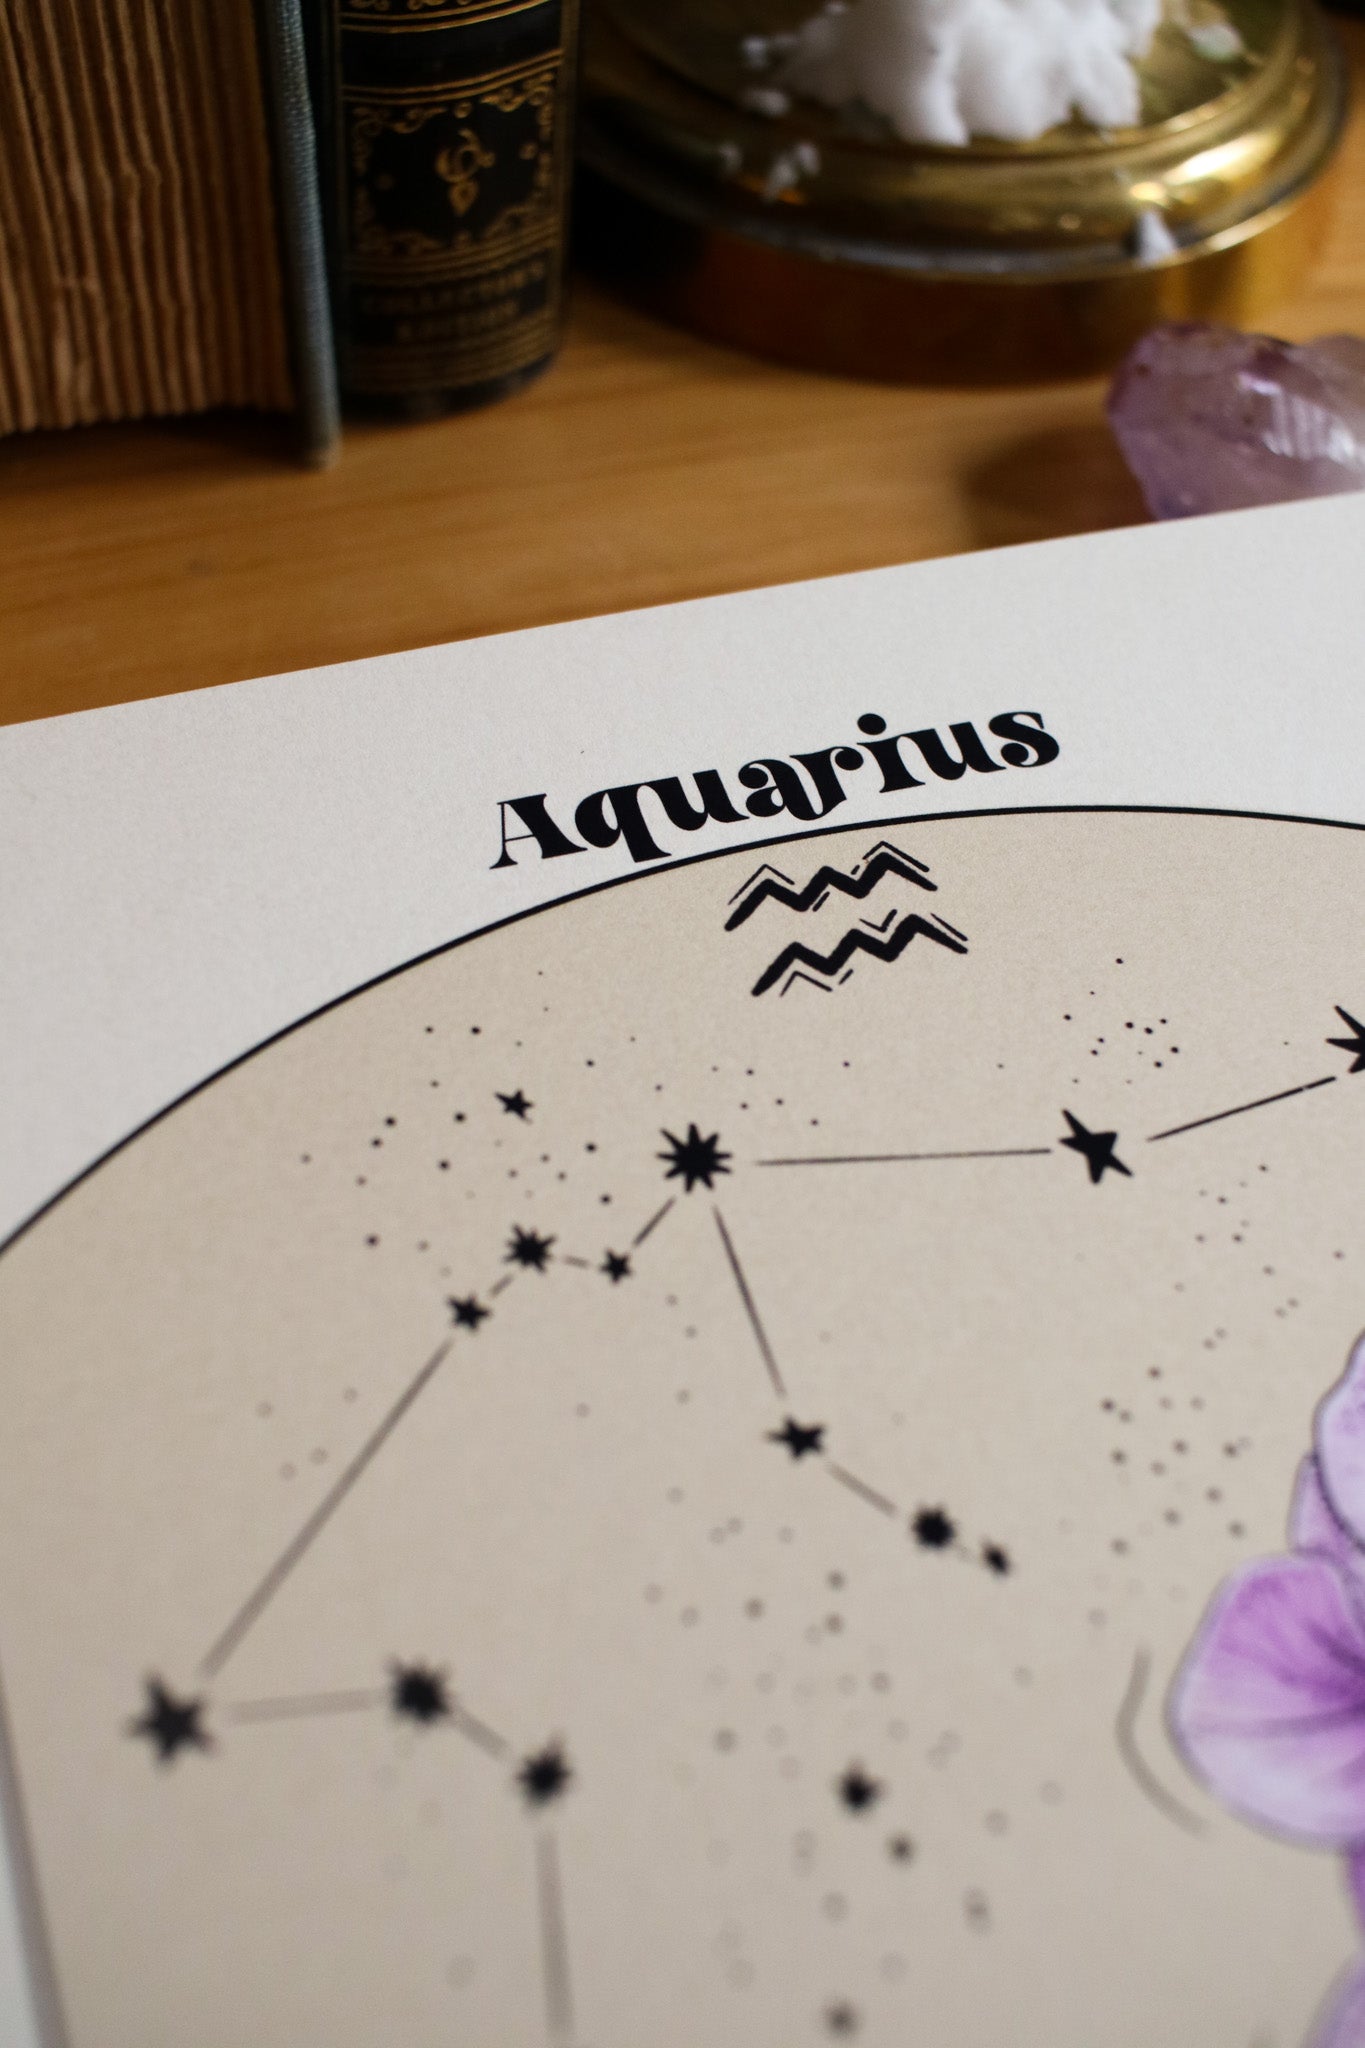 Aquarius - Astrology Infographic